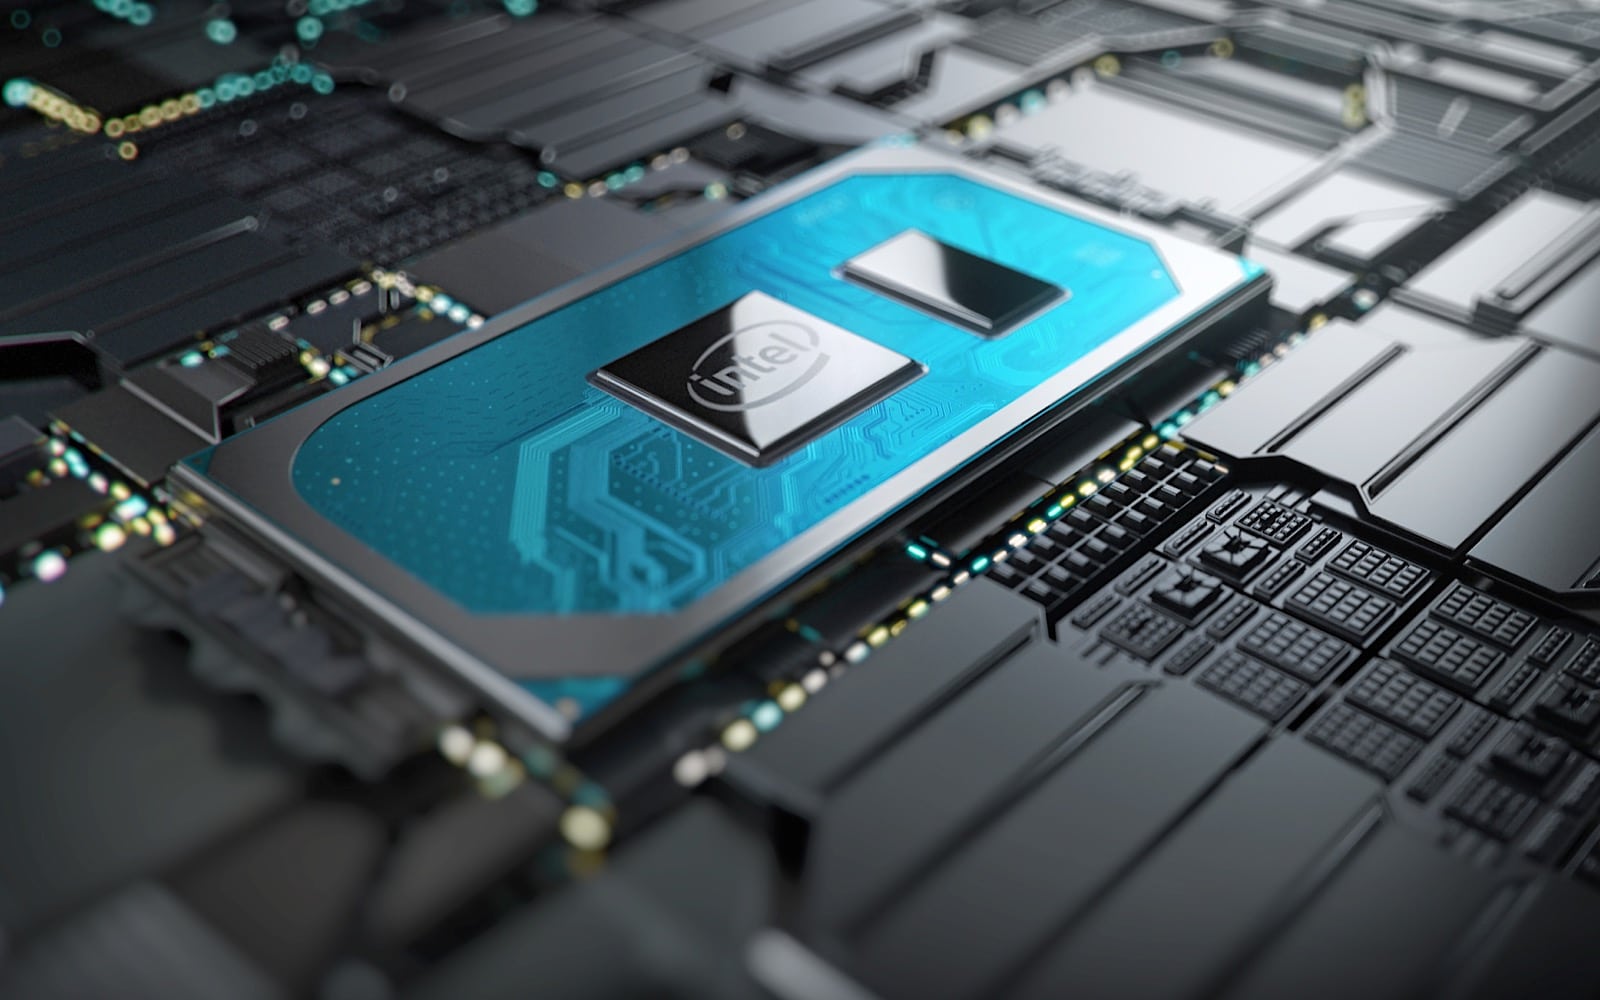 Intel's 10th generation Core processors